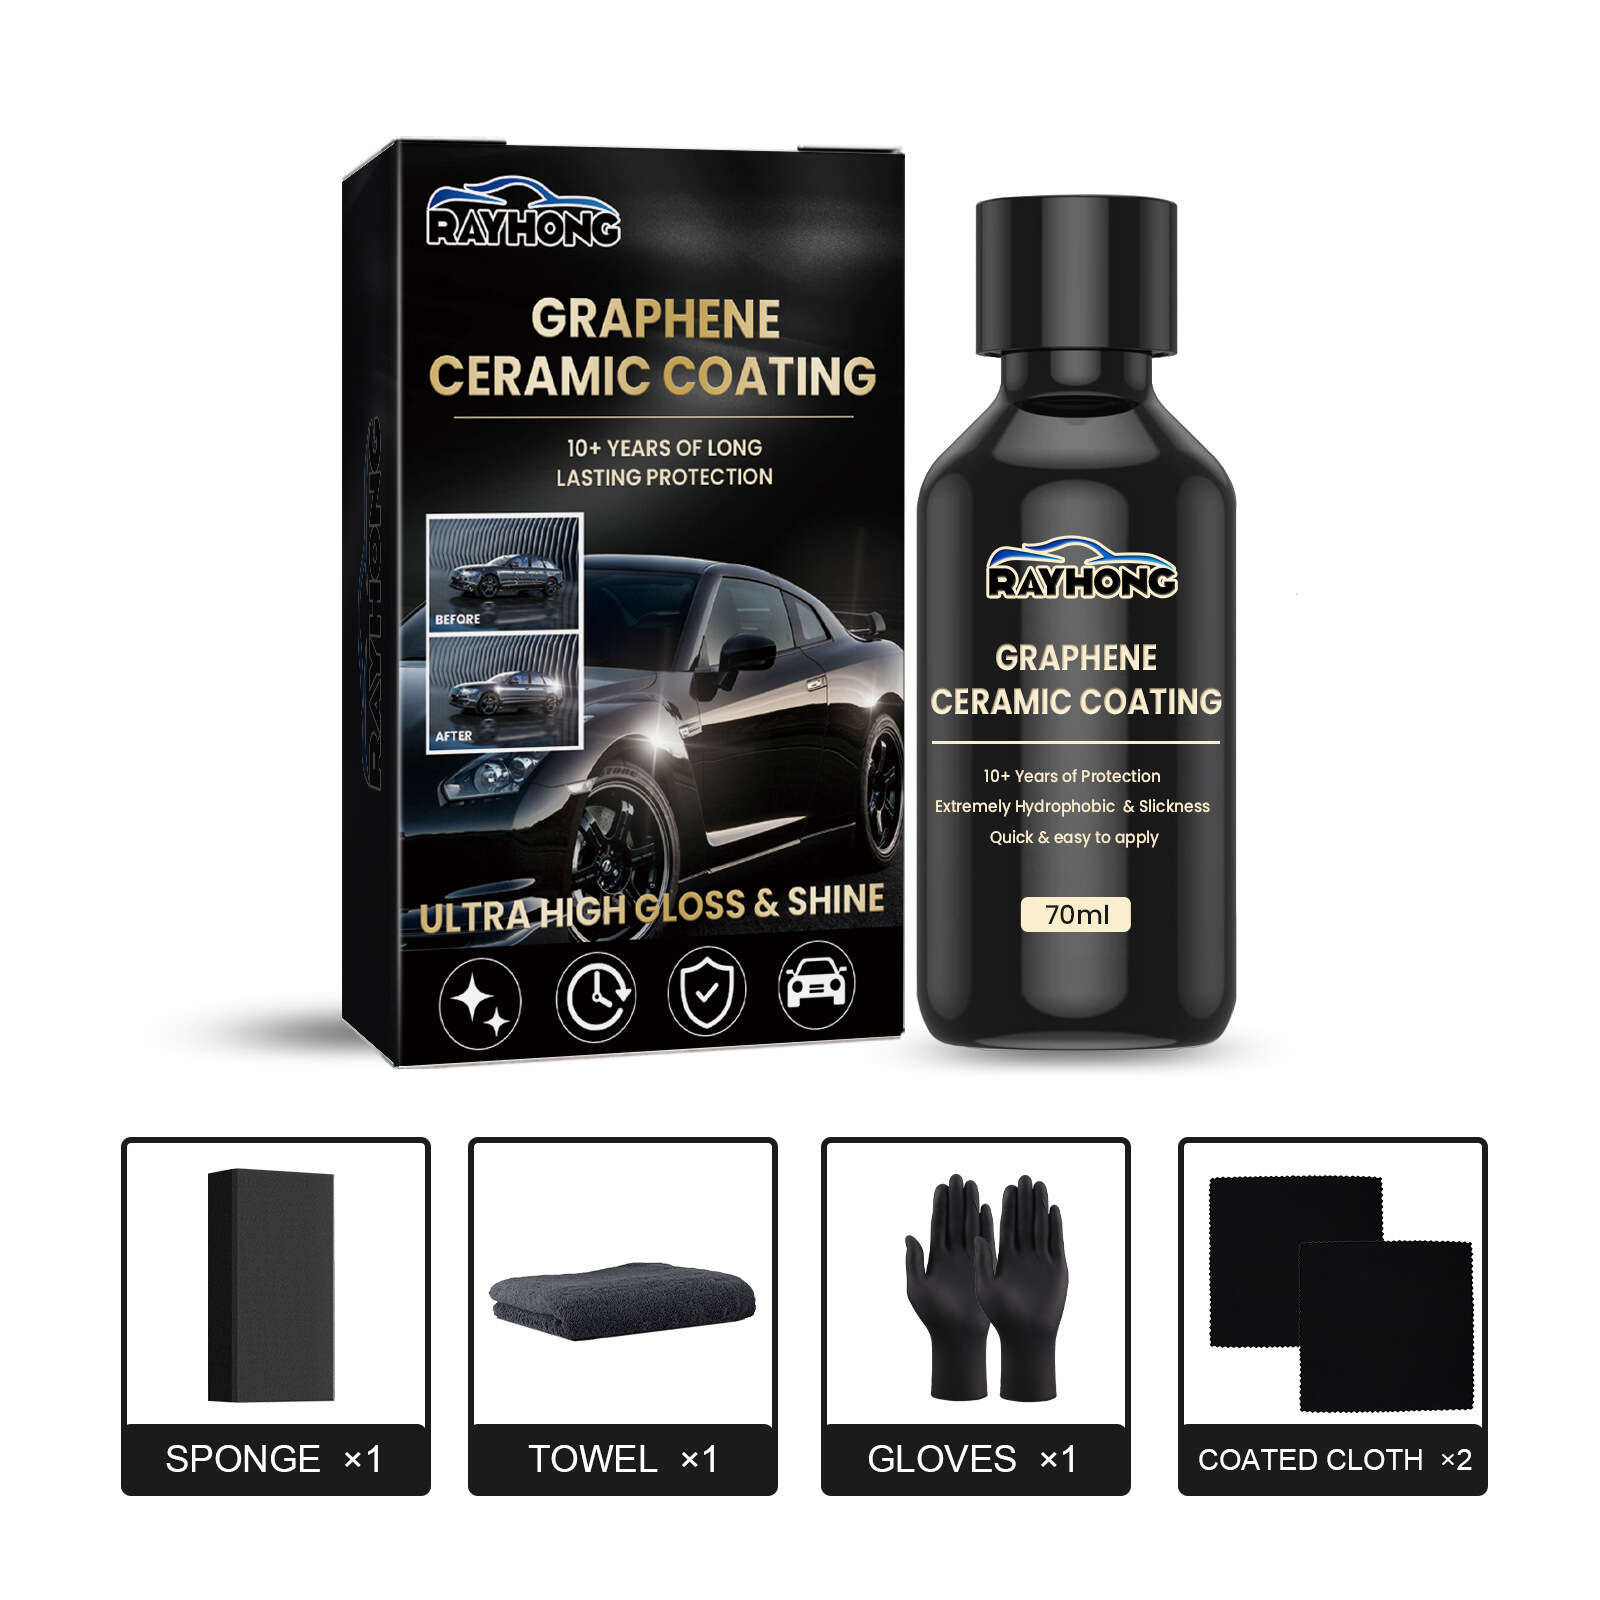 100g Black Car Special Crystal Plating Wax ,Car Paint Coating, Polishing,  Increasing Your Car Brightness